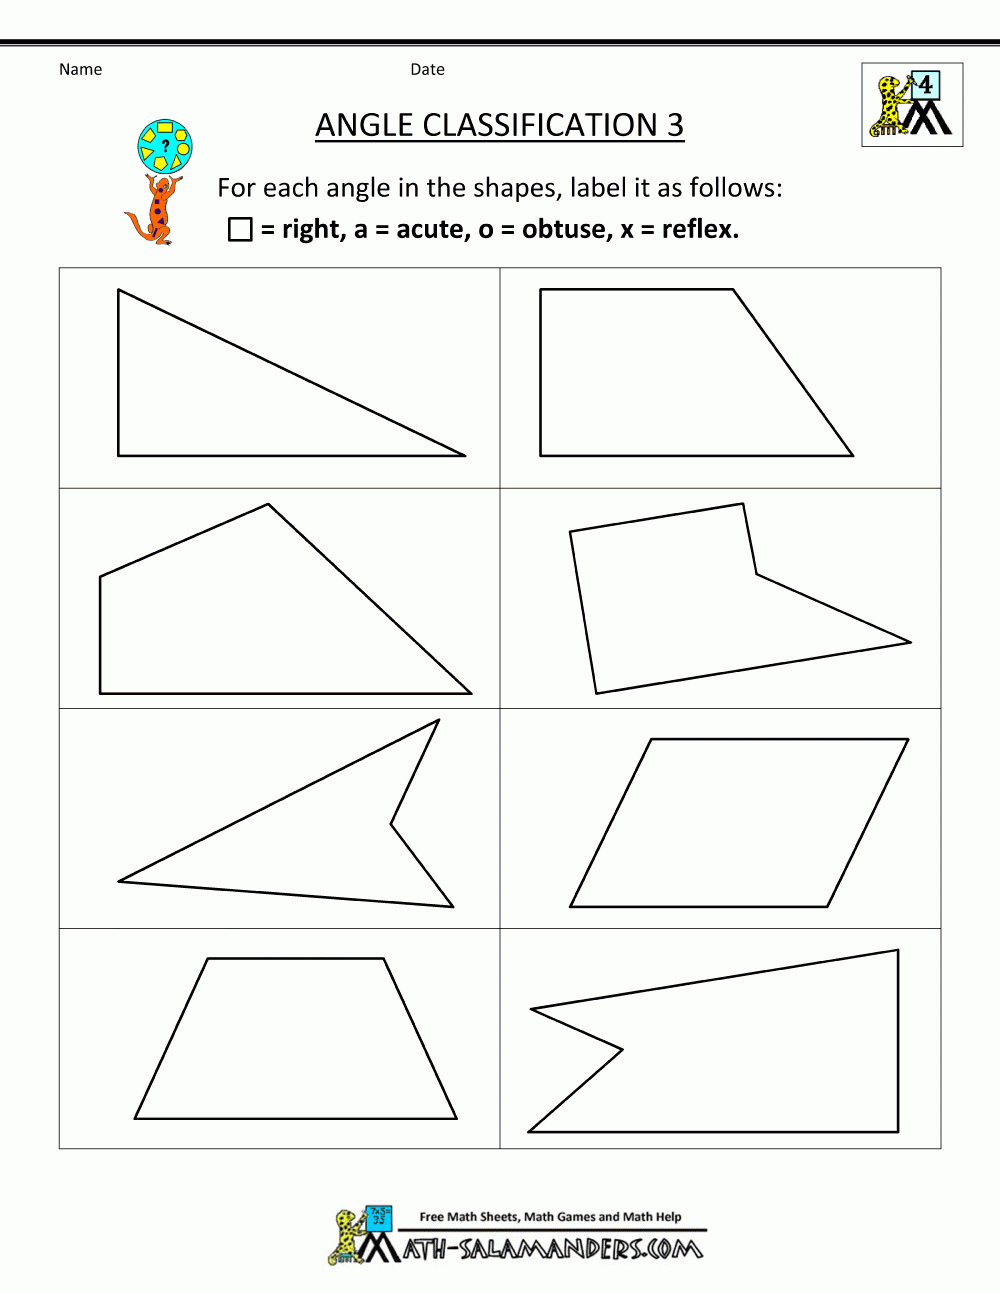 free-printable-math-worksheets-for-4th-grade-angles-math-worksheets